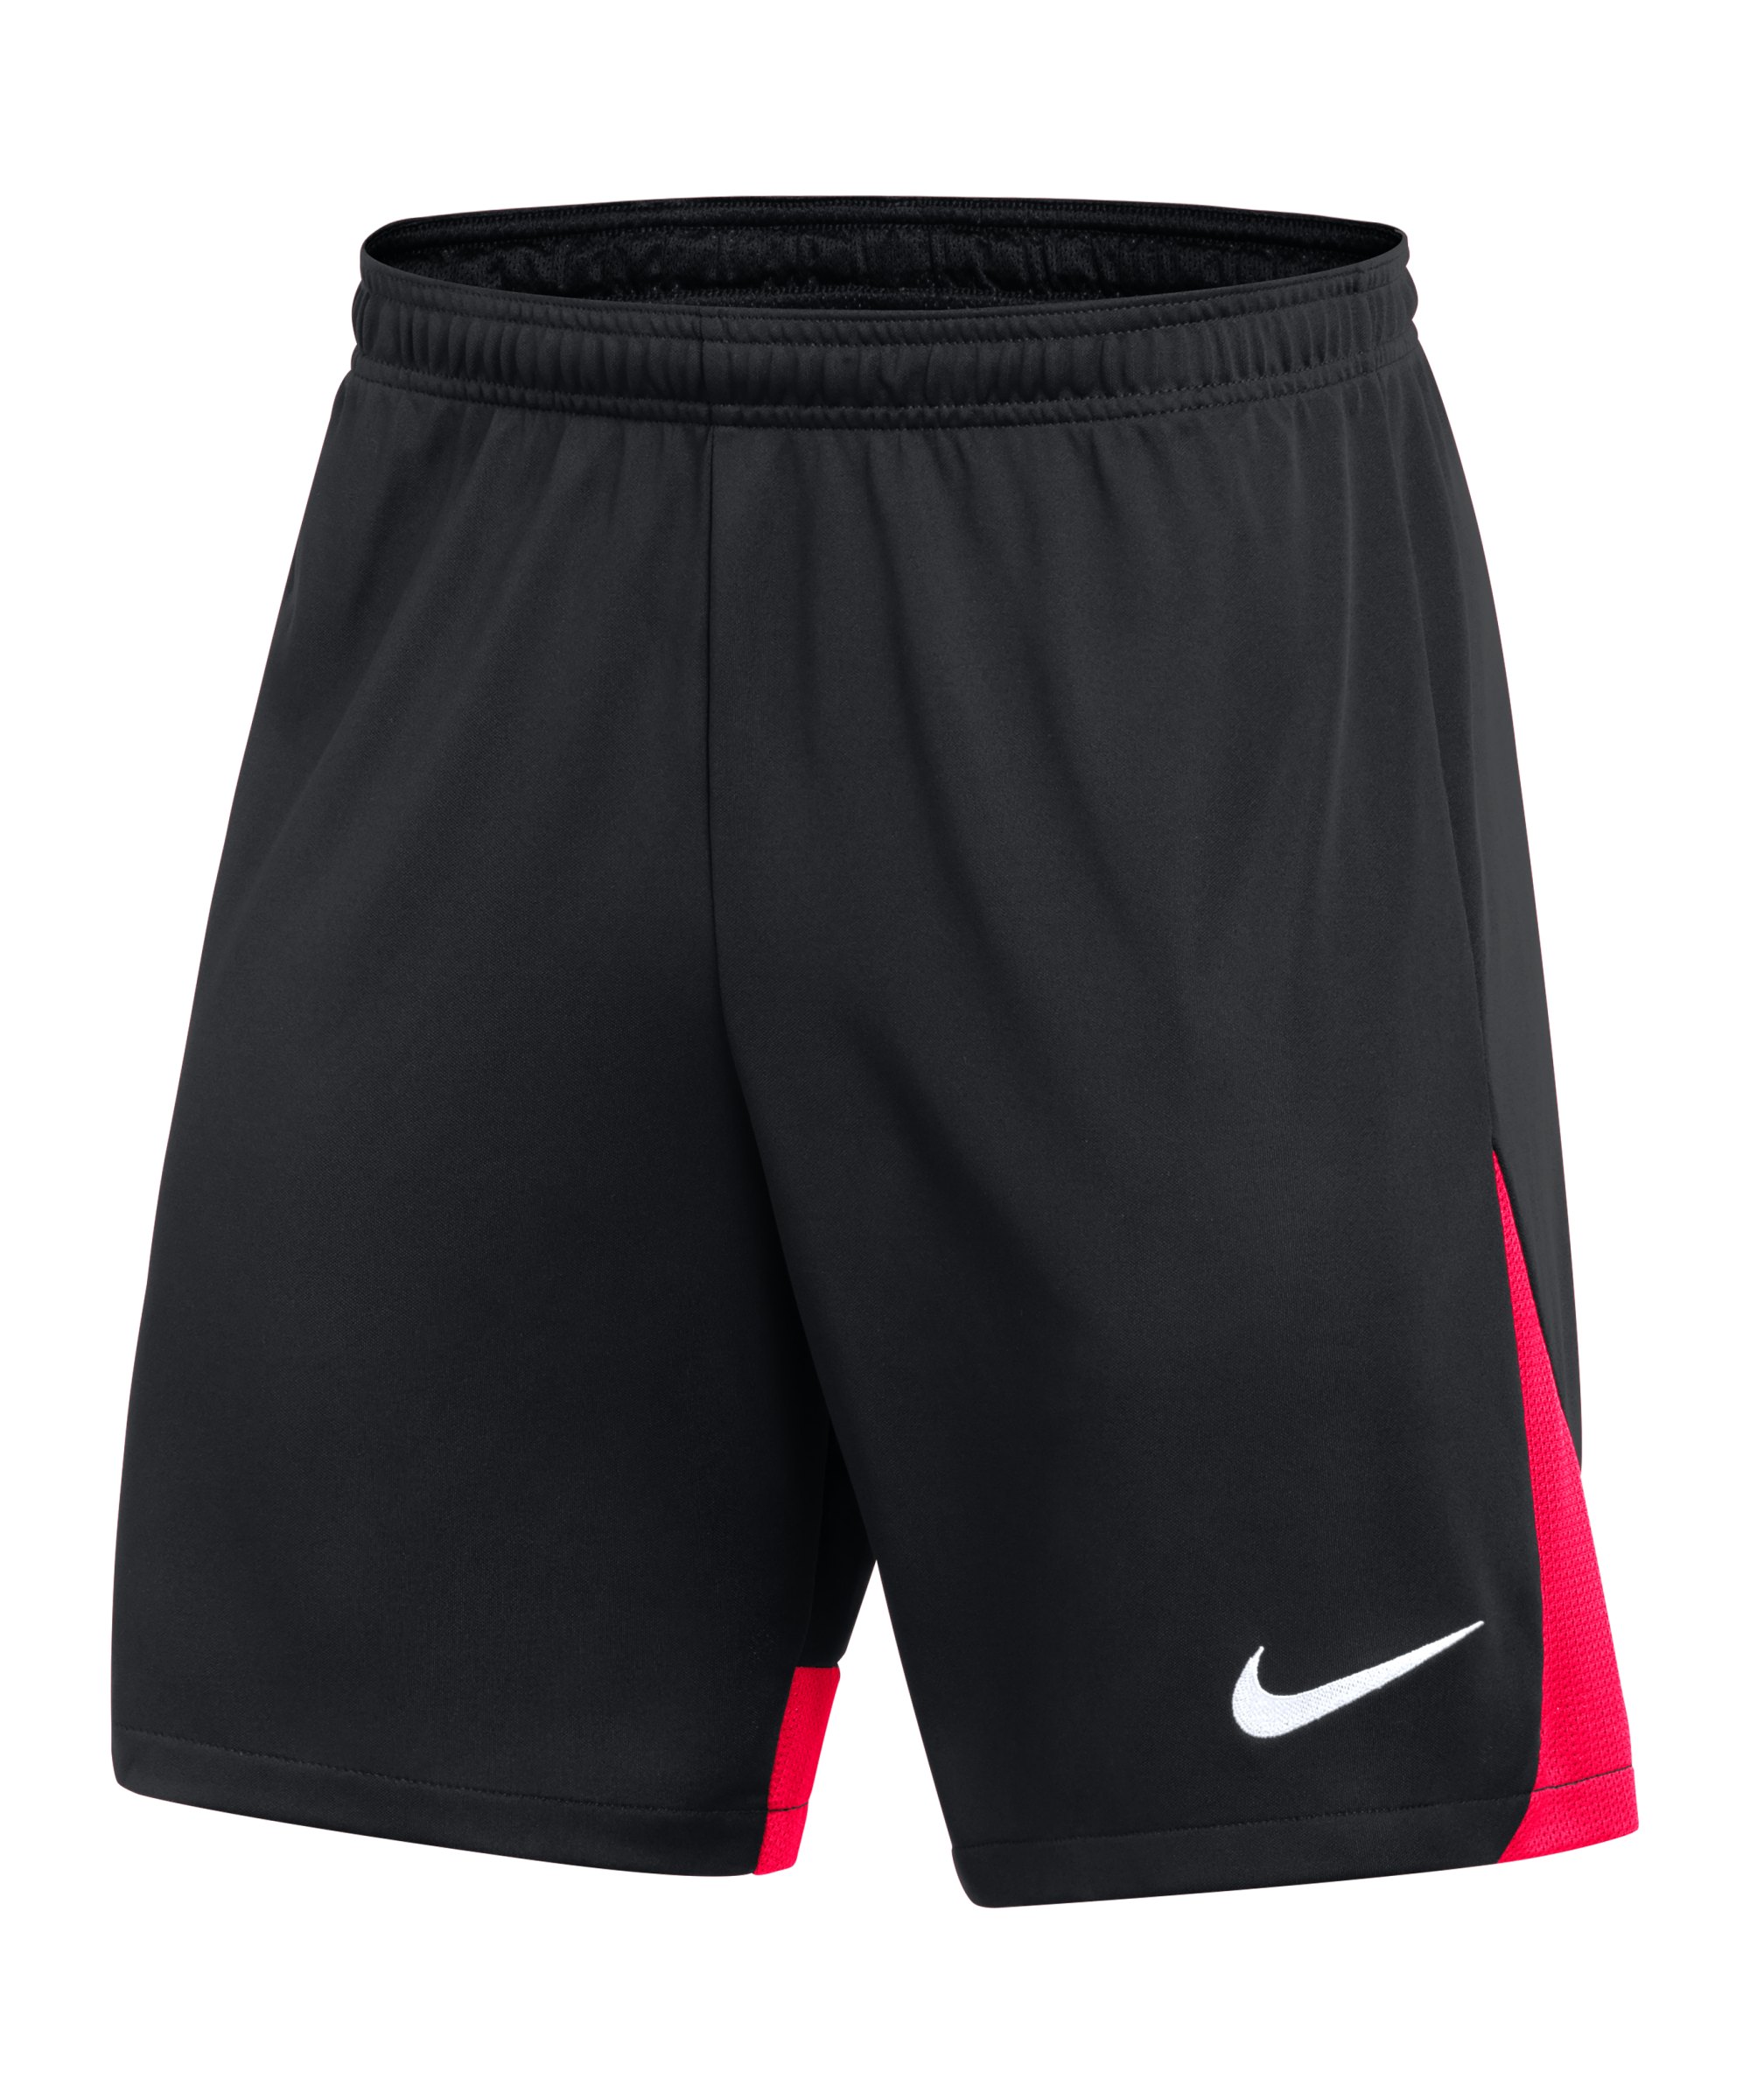 Nike Academy Pro Short Schwarz Rot Weiss F013 - schwarz